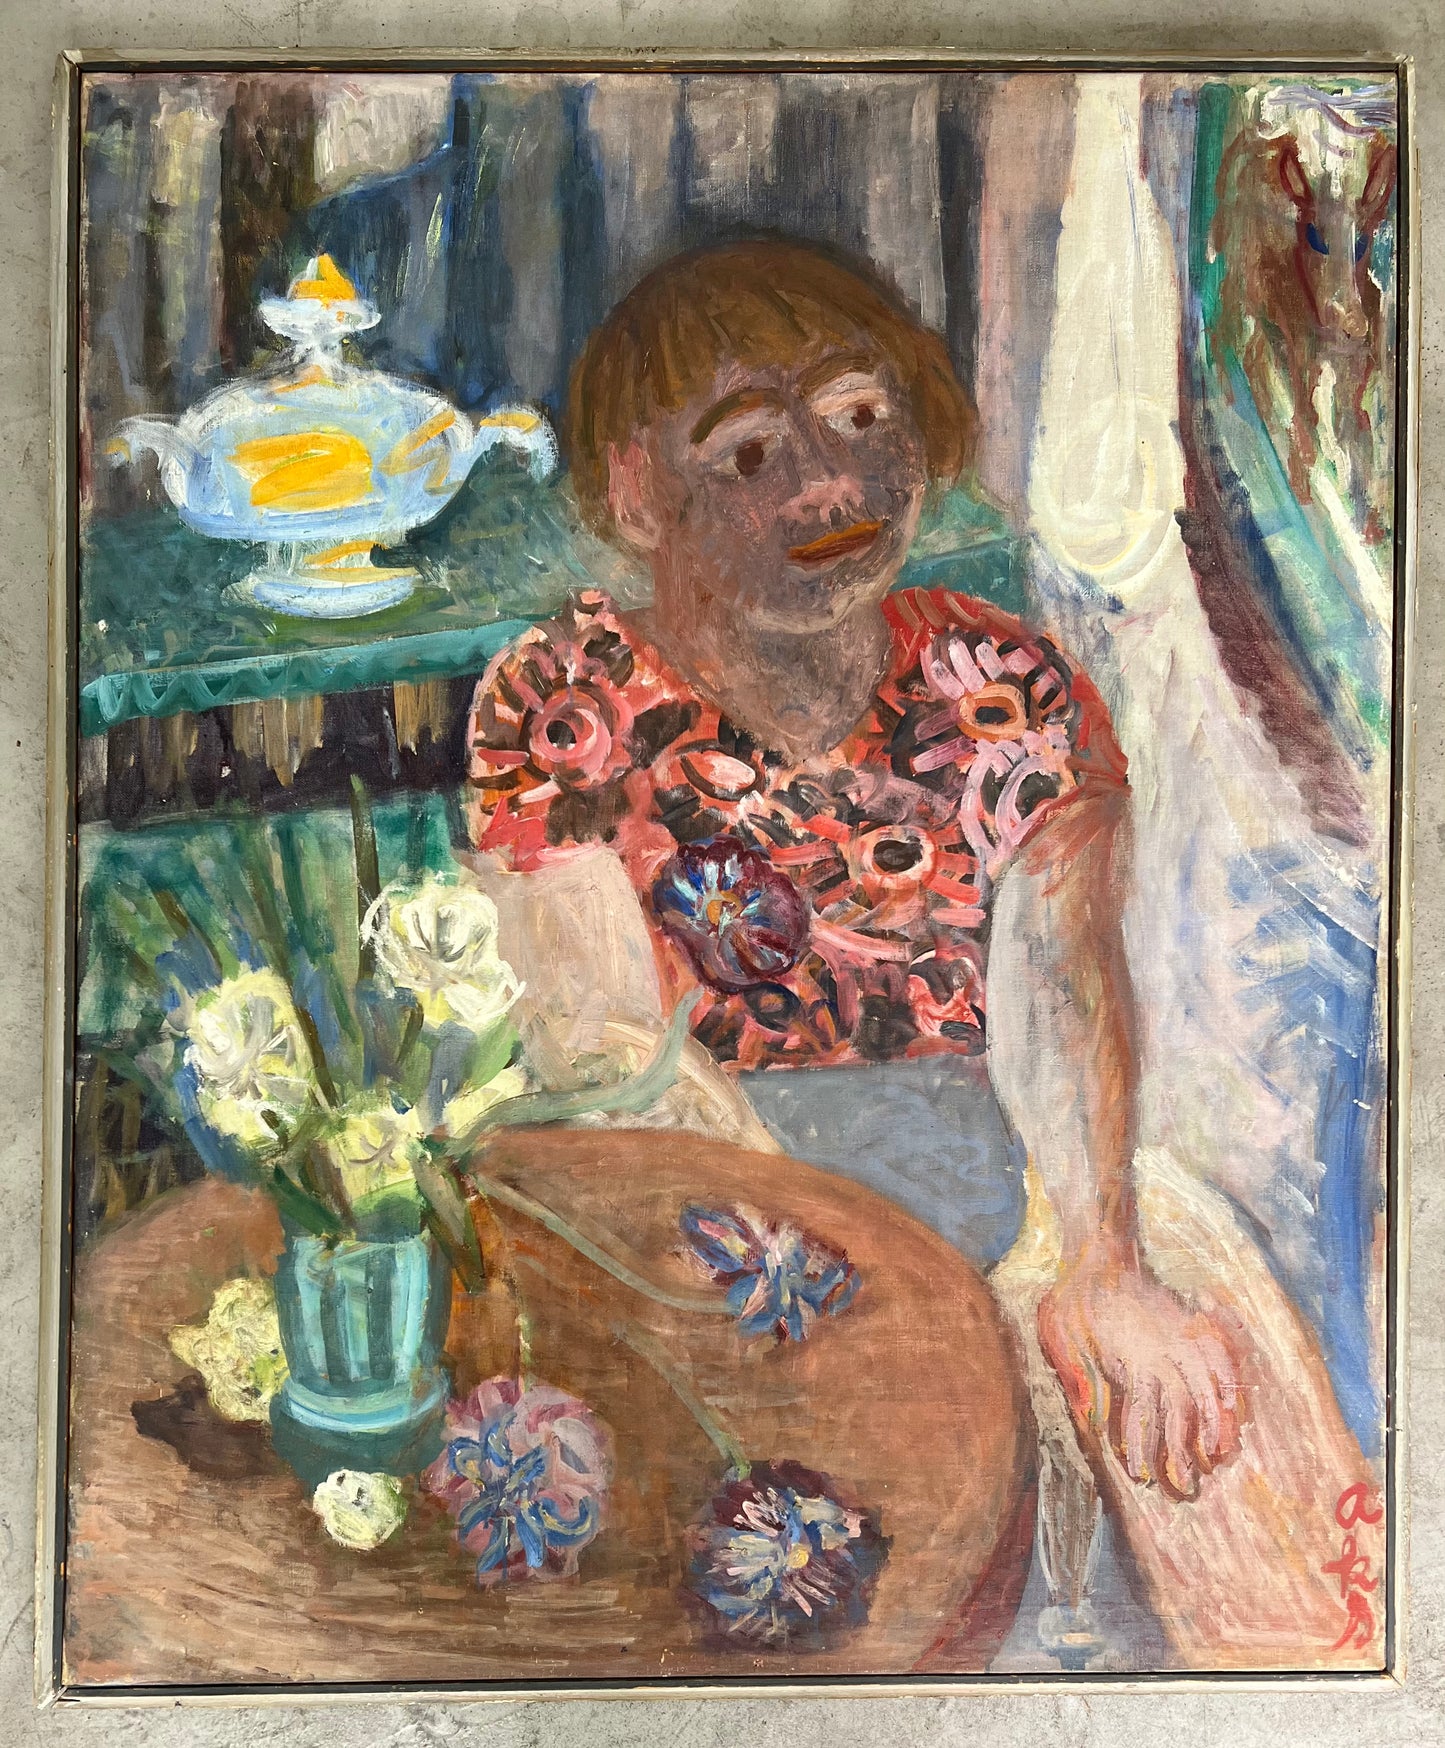 Anna Klindt Sørensen. “Margrethe Clausen i aftensol”, ca. 1940